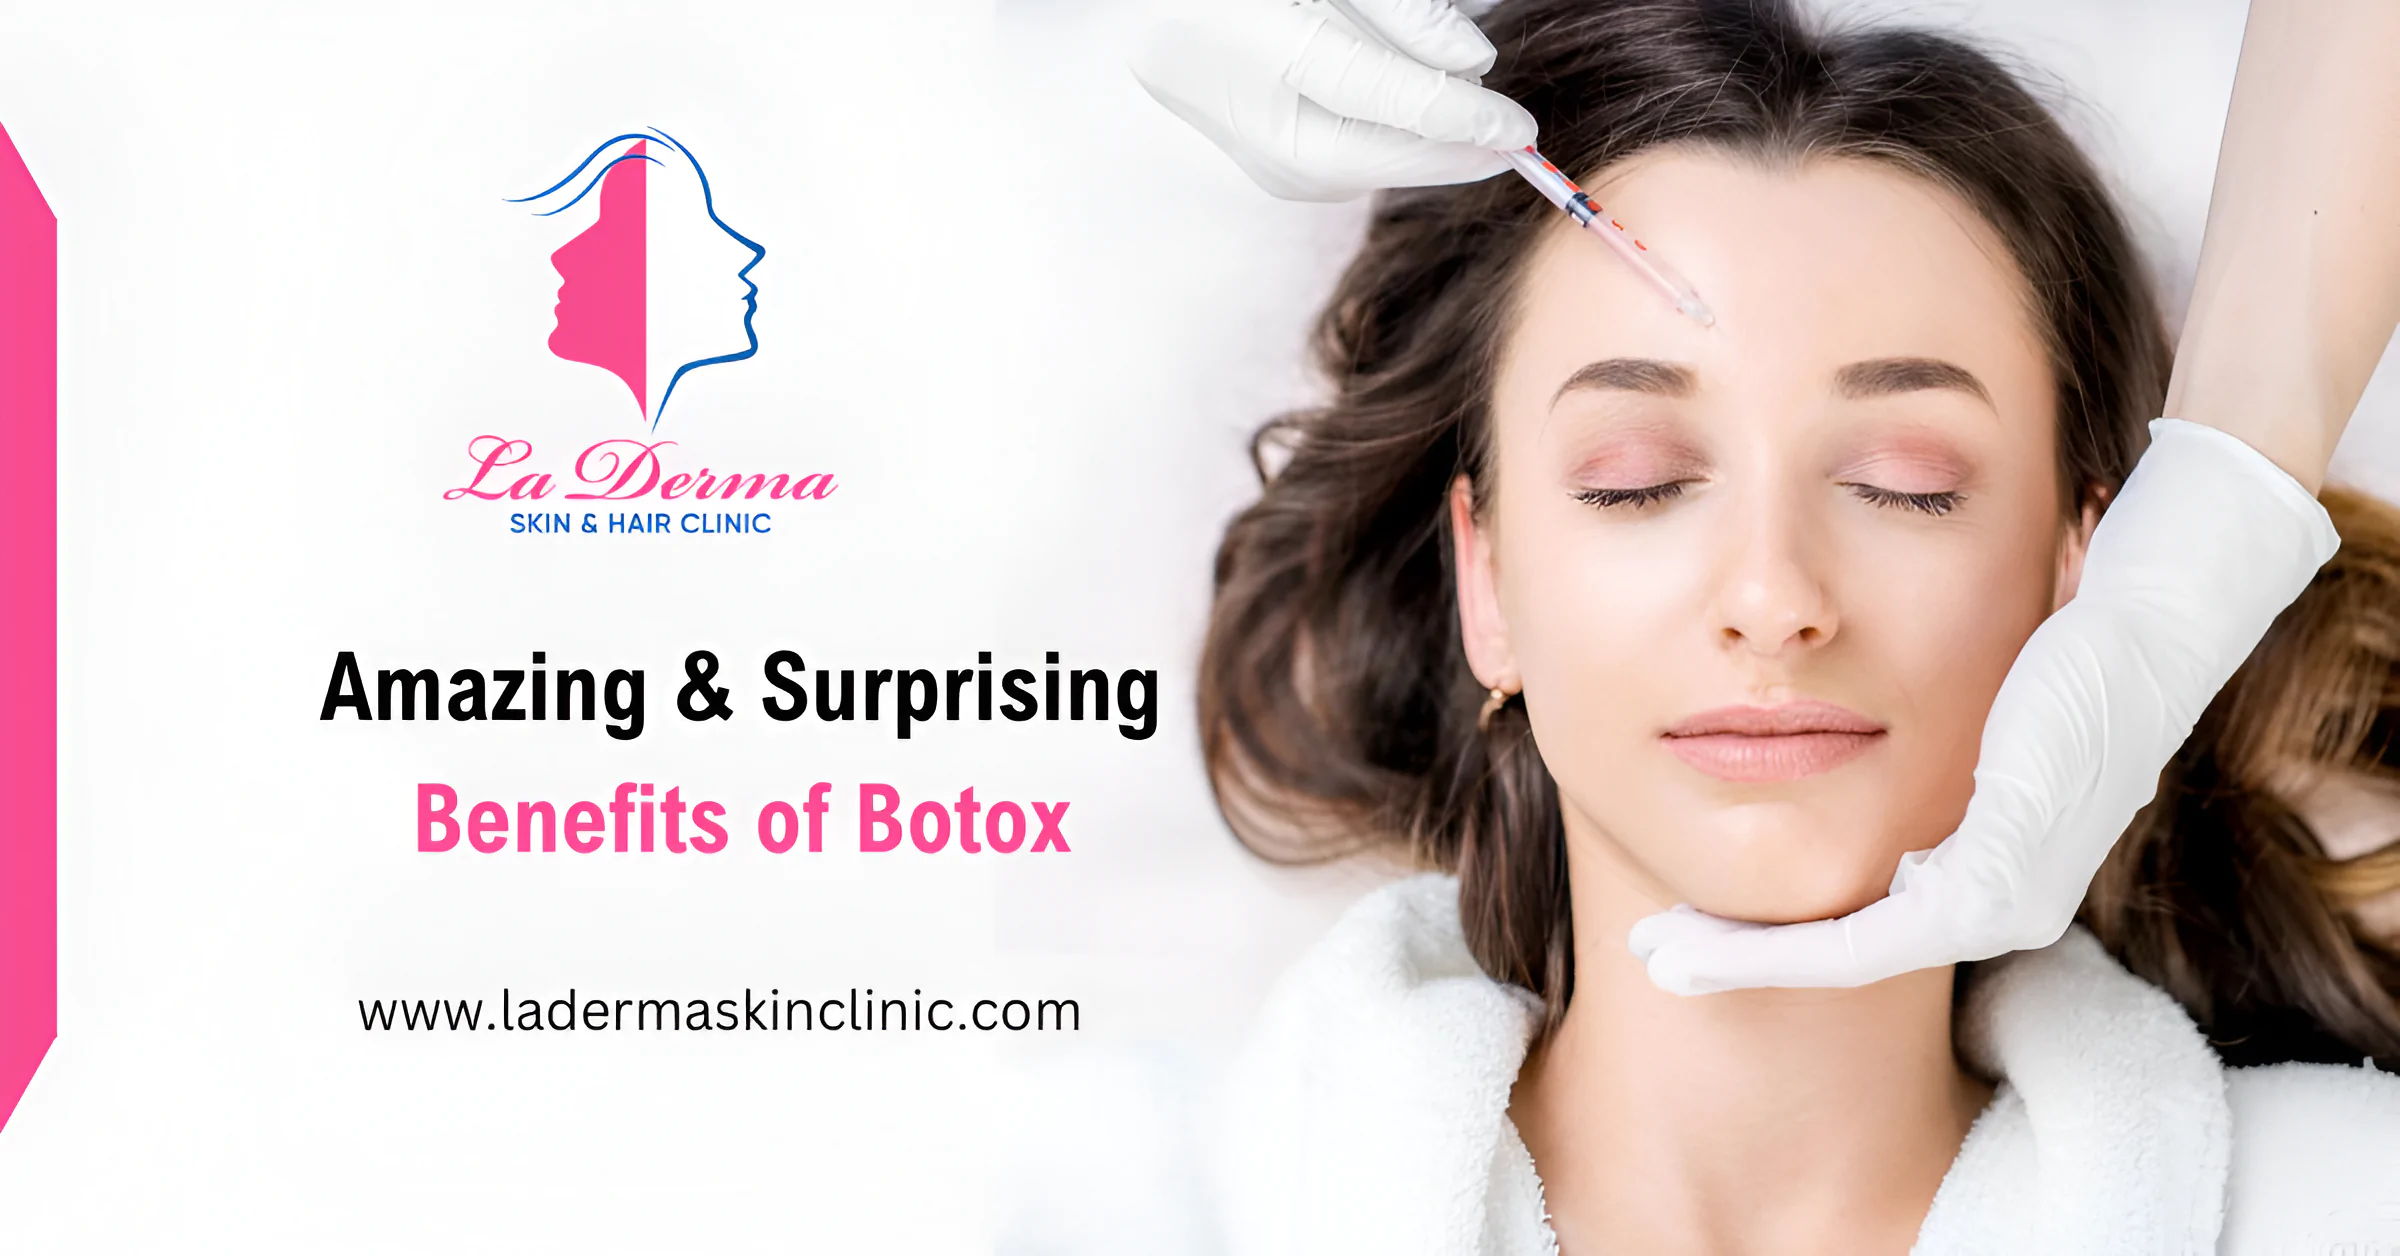 Amazing & Surprising Benefits of Botox